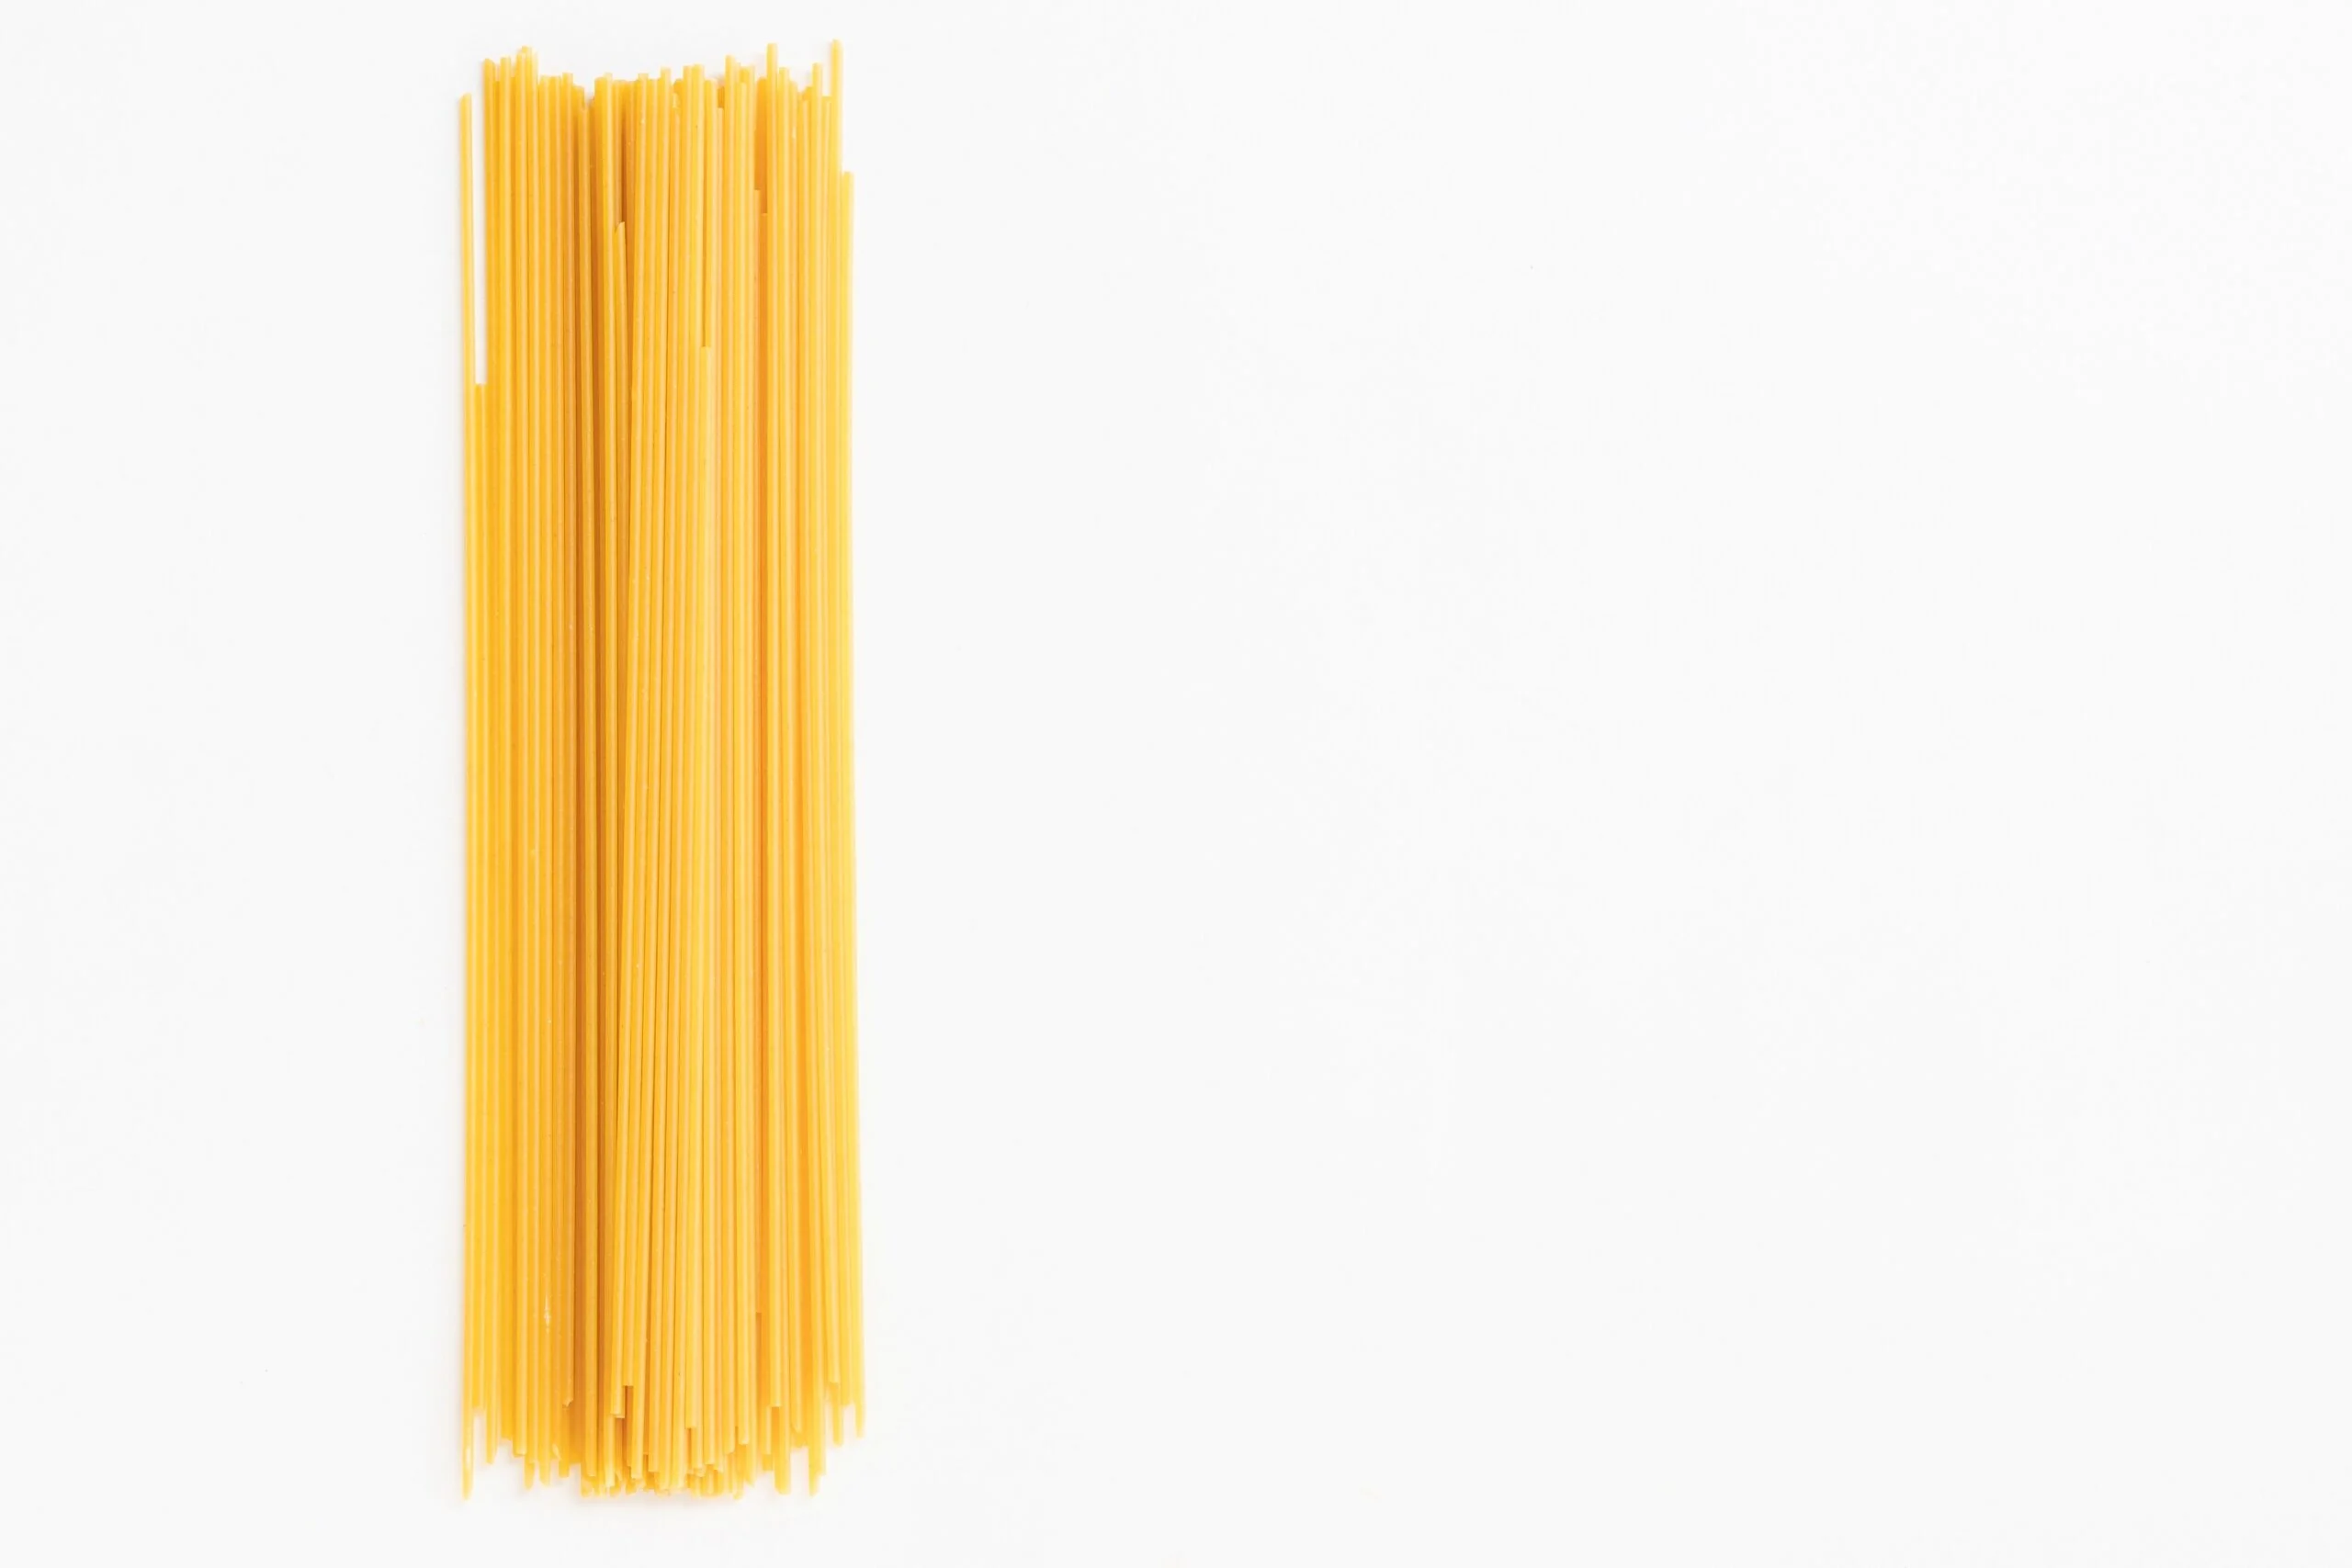 Raw,dry,spaghetti,italian,pasta,spaghetti,line,texture,yellow,long